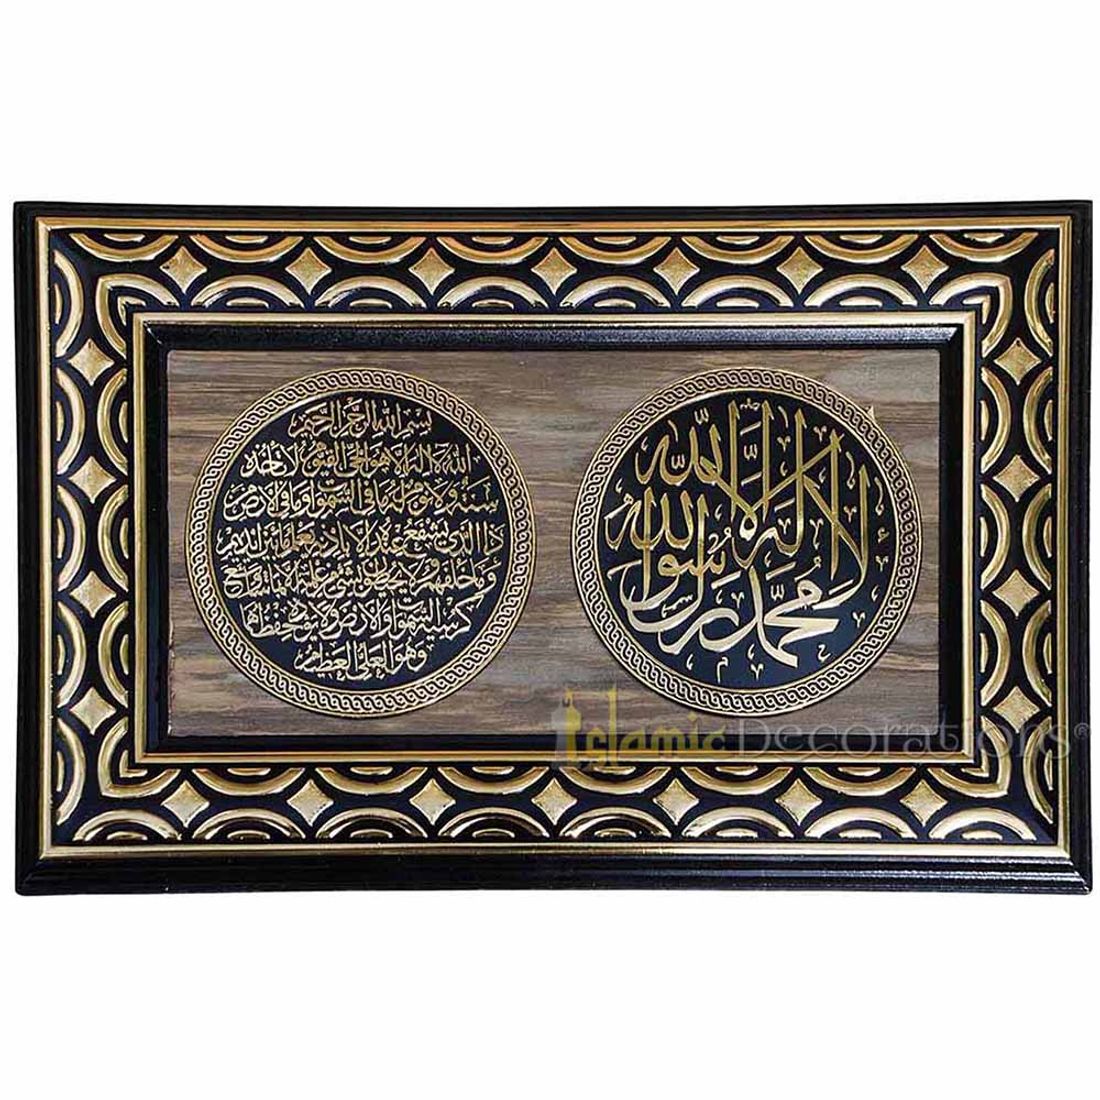 Gold & Black Rectangular Molded 22 x 34 cm Ayatul Kursi & Shahada Molded Display Plaque – Islamic Calligraphy Art